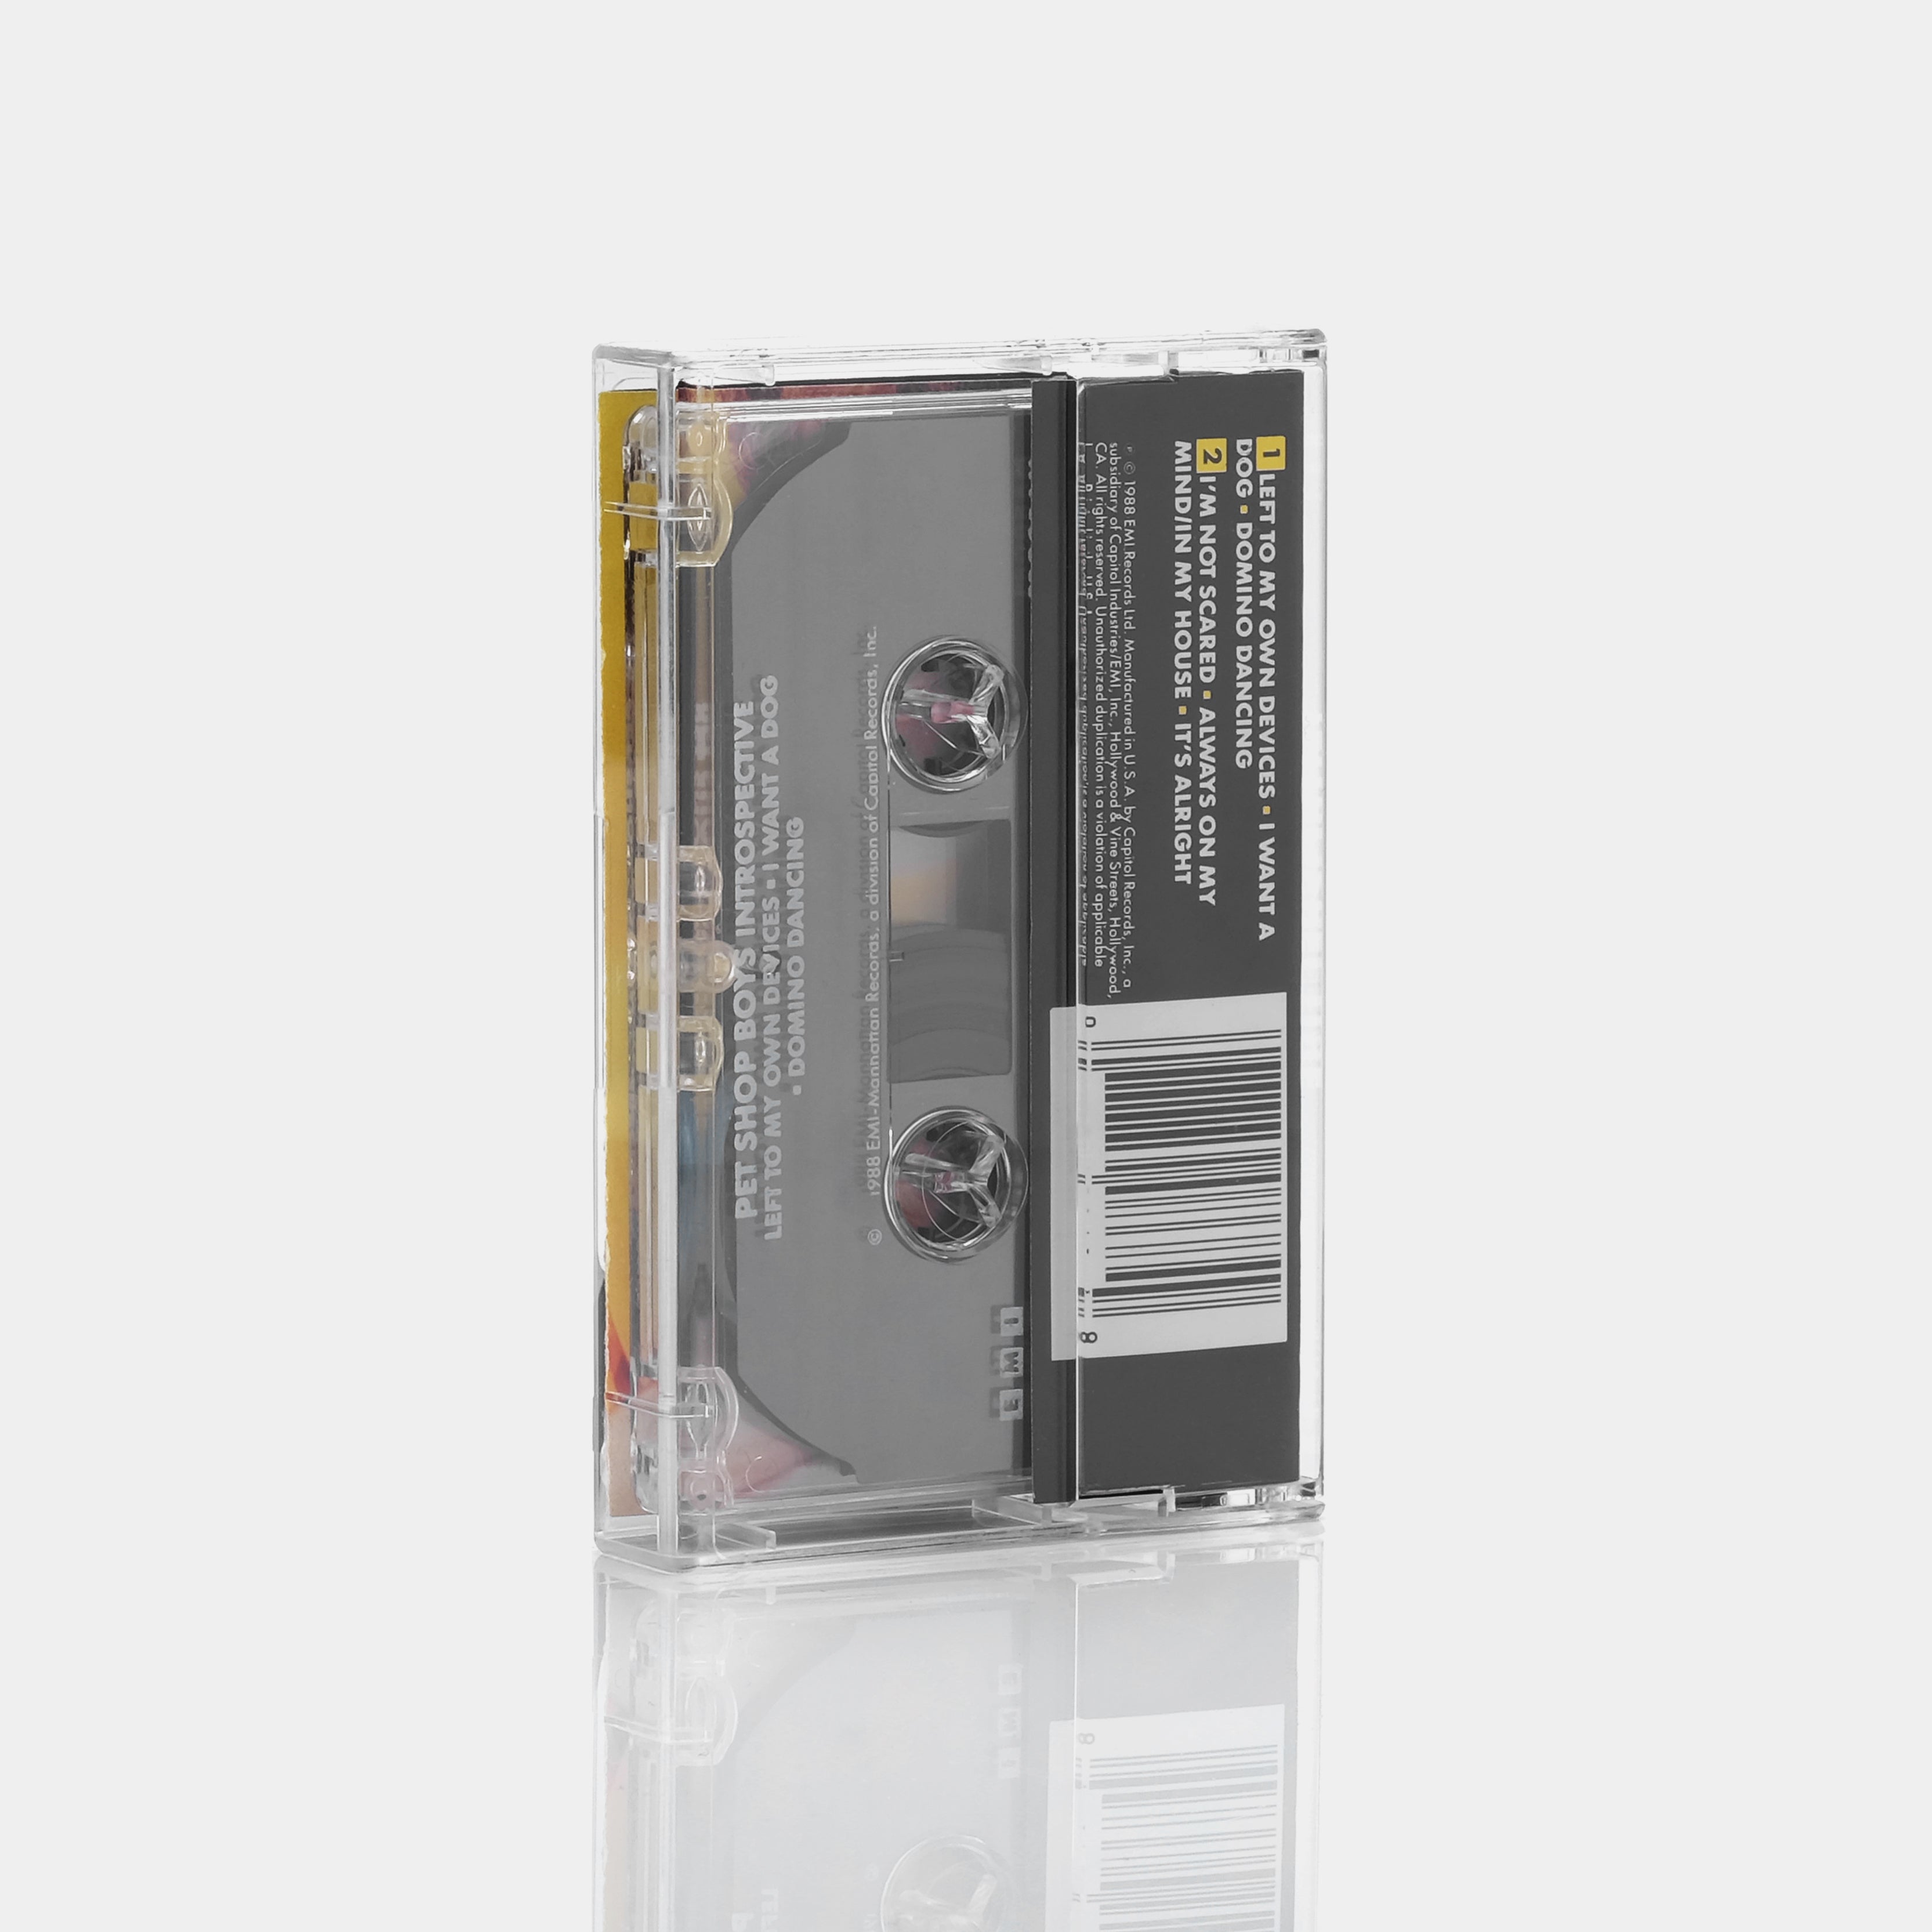 Pet Shop Boys - Introspective Cassette Tape